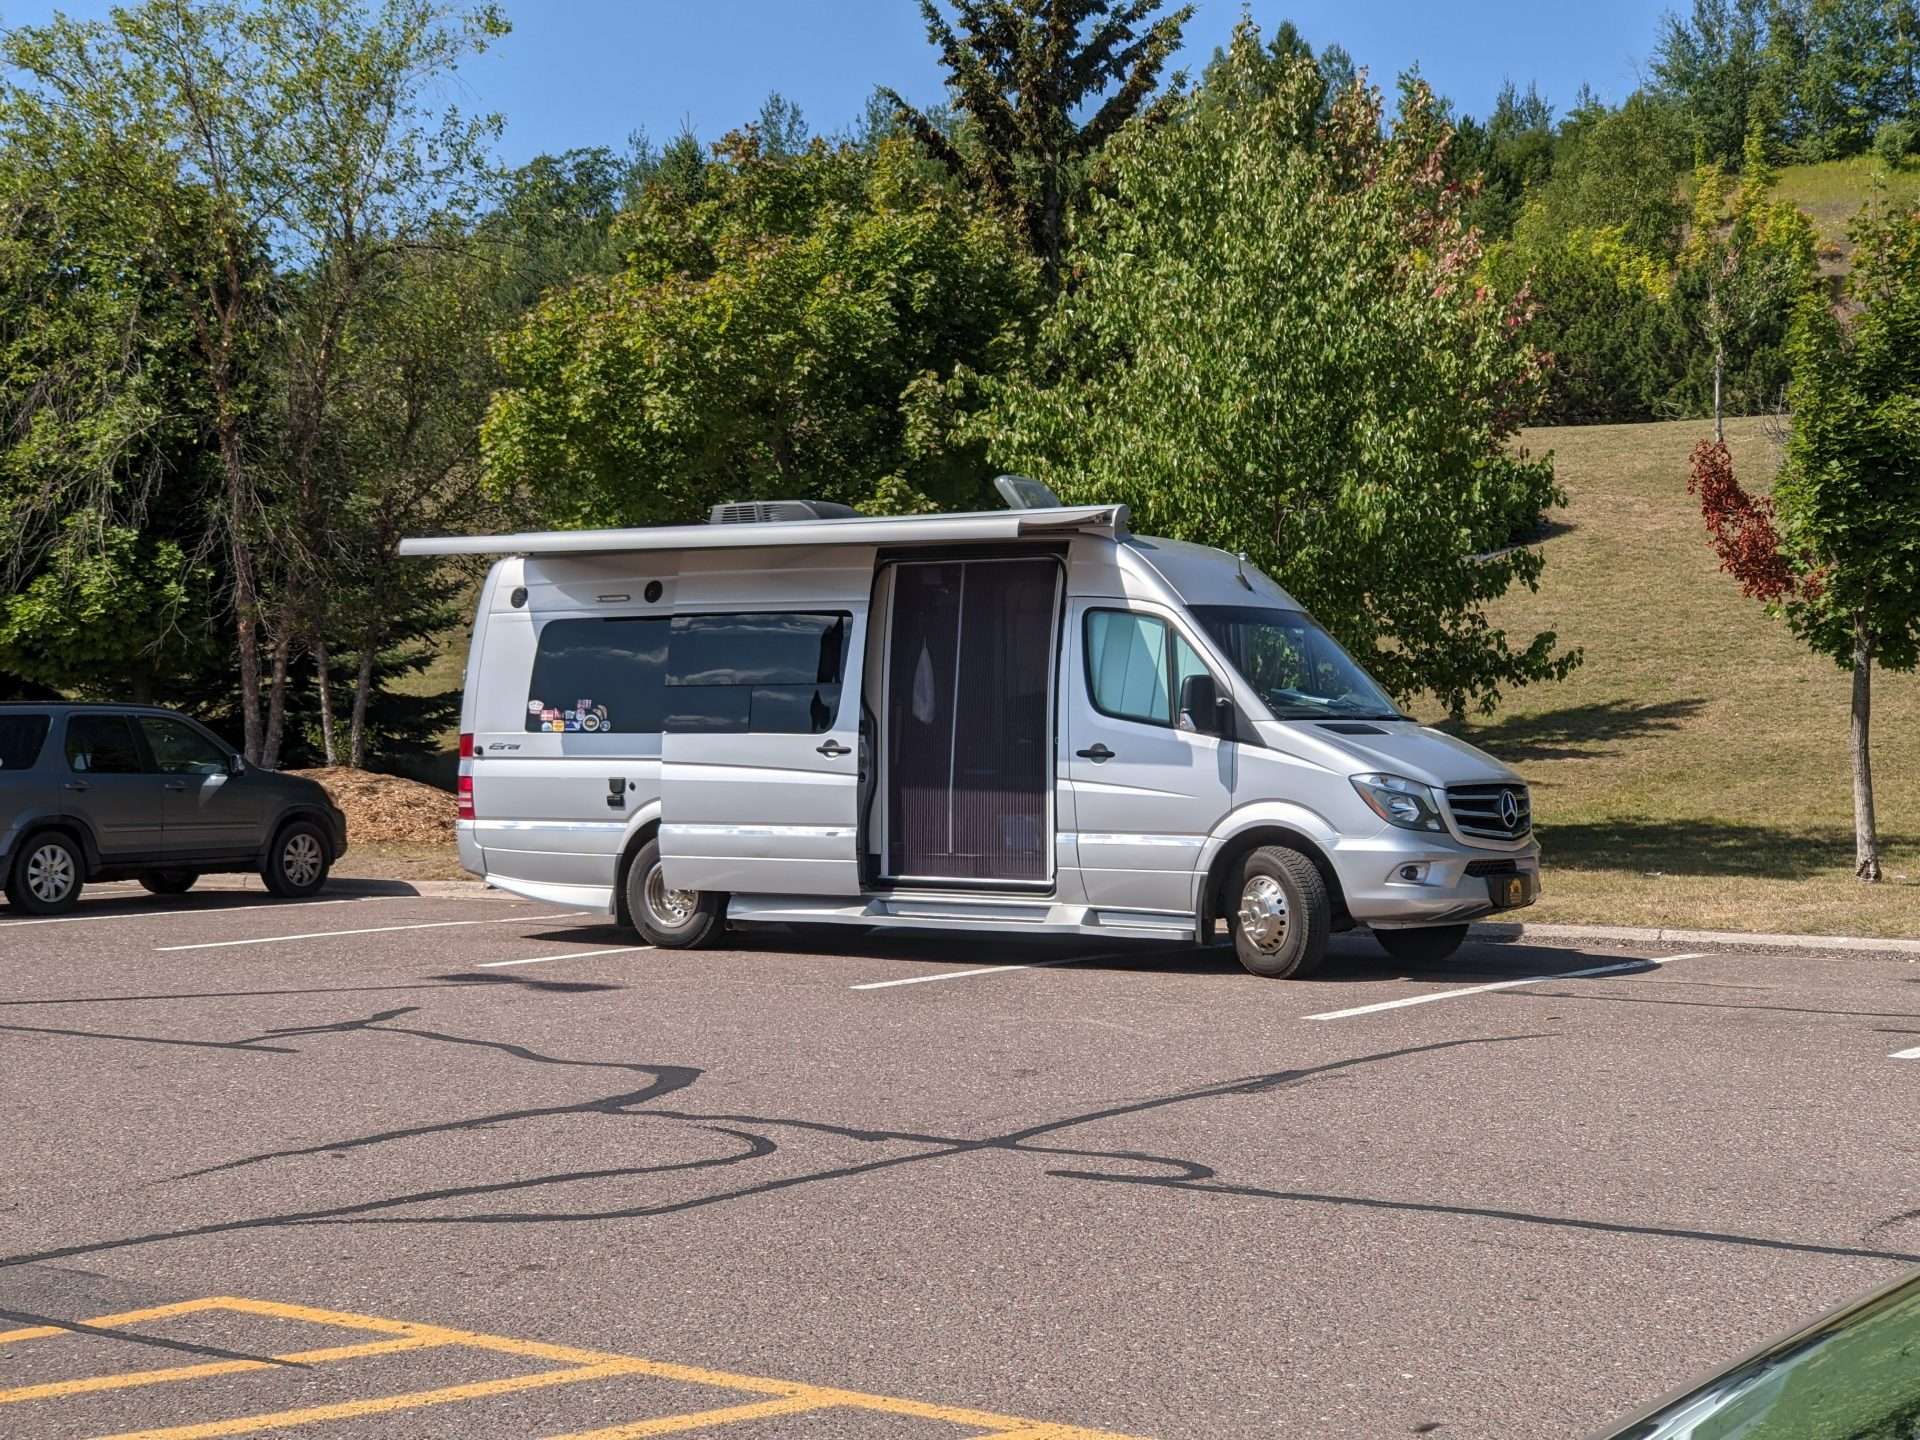 Camper van parked in Walmart parking lot